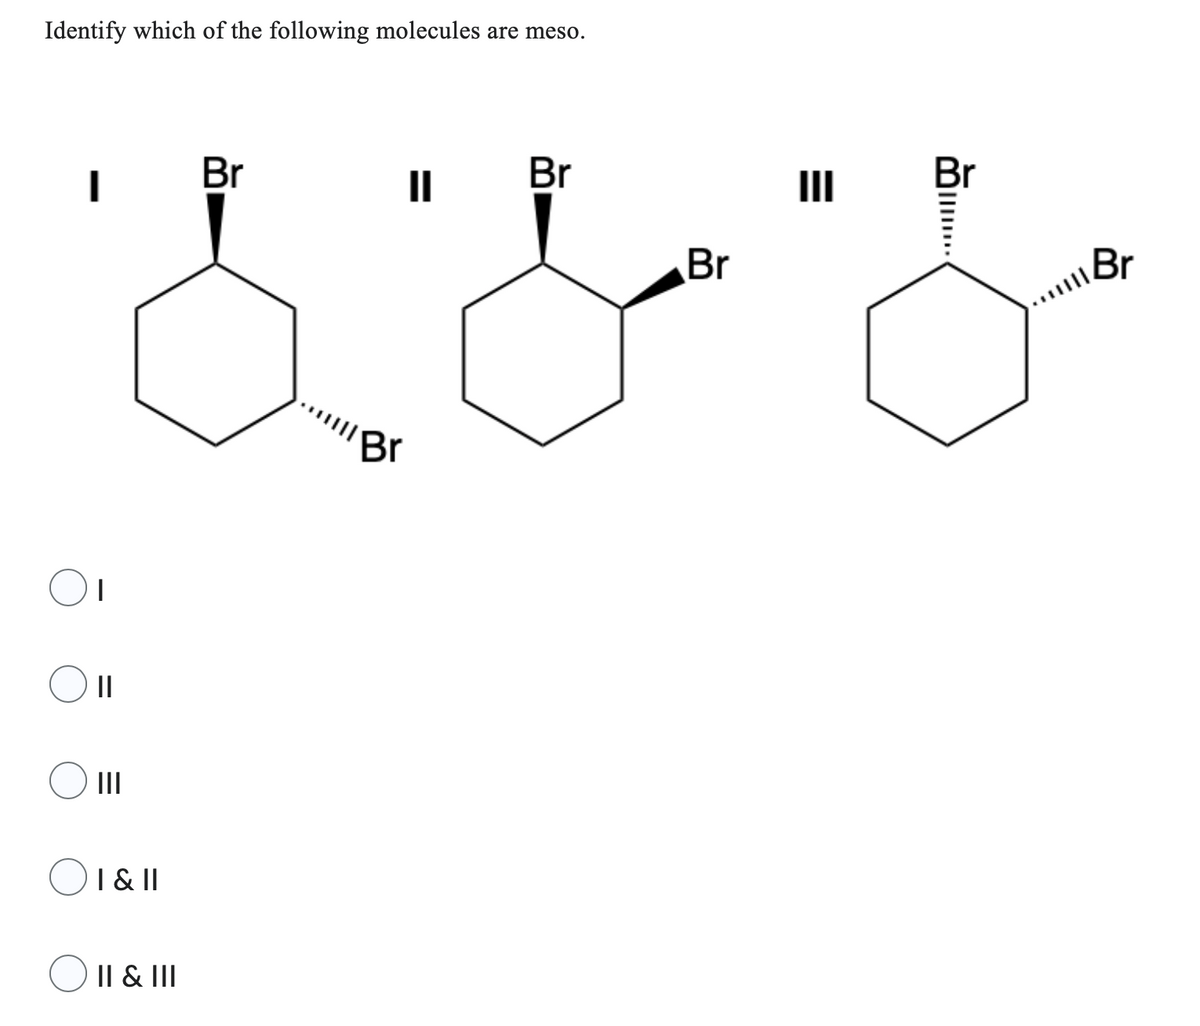 Identify which of the following molecules are meso.
I
1
O ||
I & II
|| & |||
Br
Br
||
Br
Br
|||
Br
Br